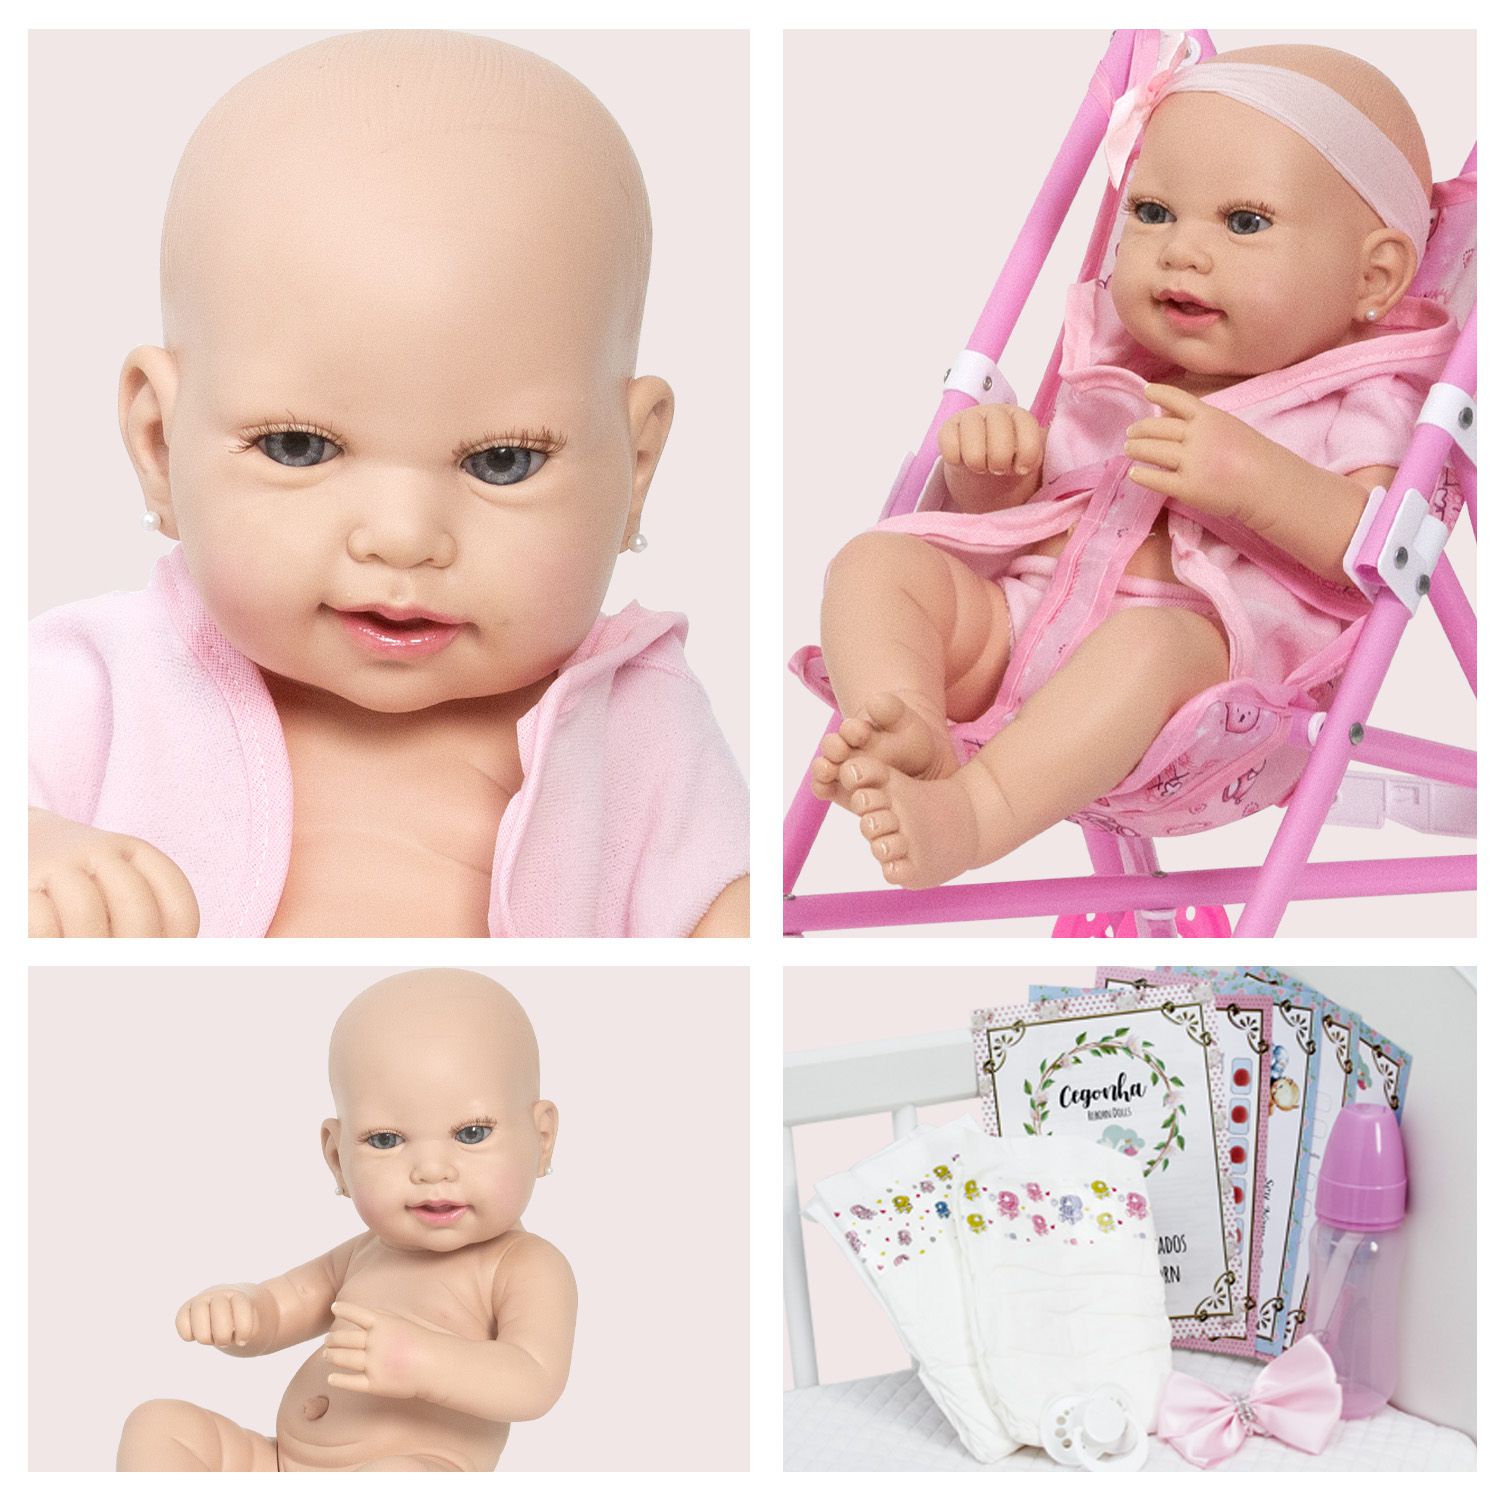 Boneca Bebê Reborn Real Brinquedo Menina Surpresa Rosa Princ - Chic Outlet  - Economize com estilo!